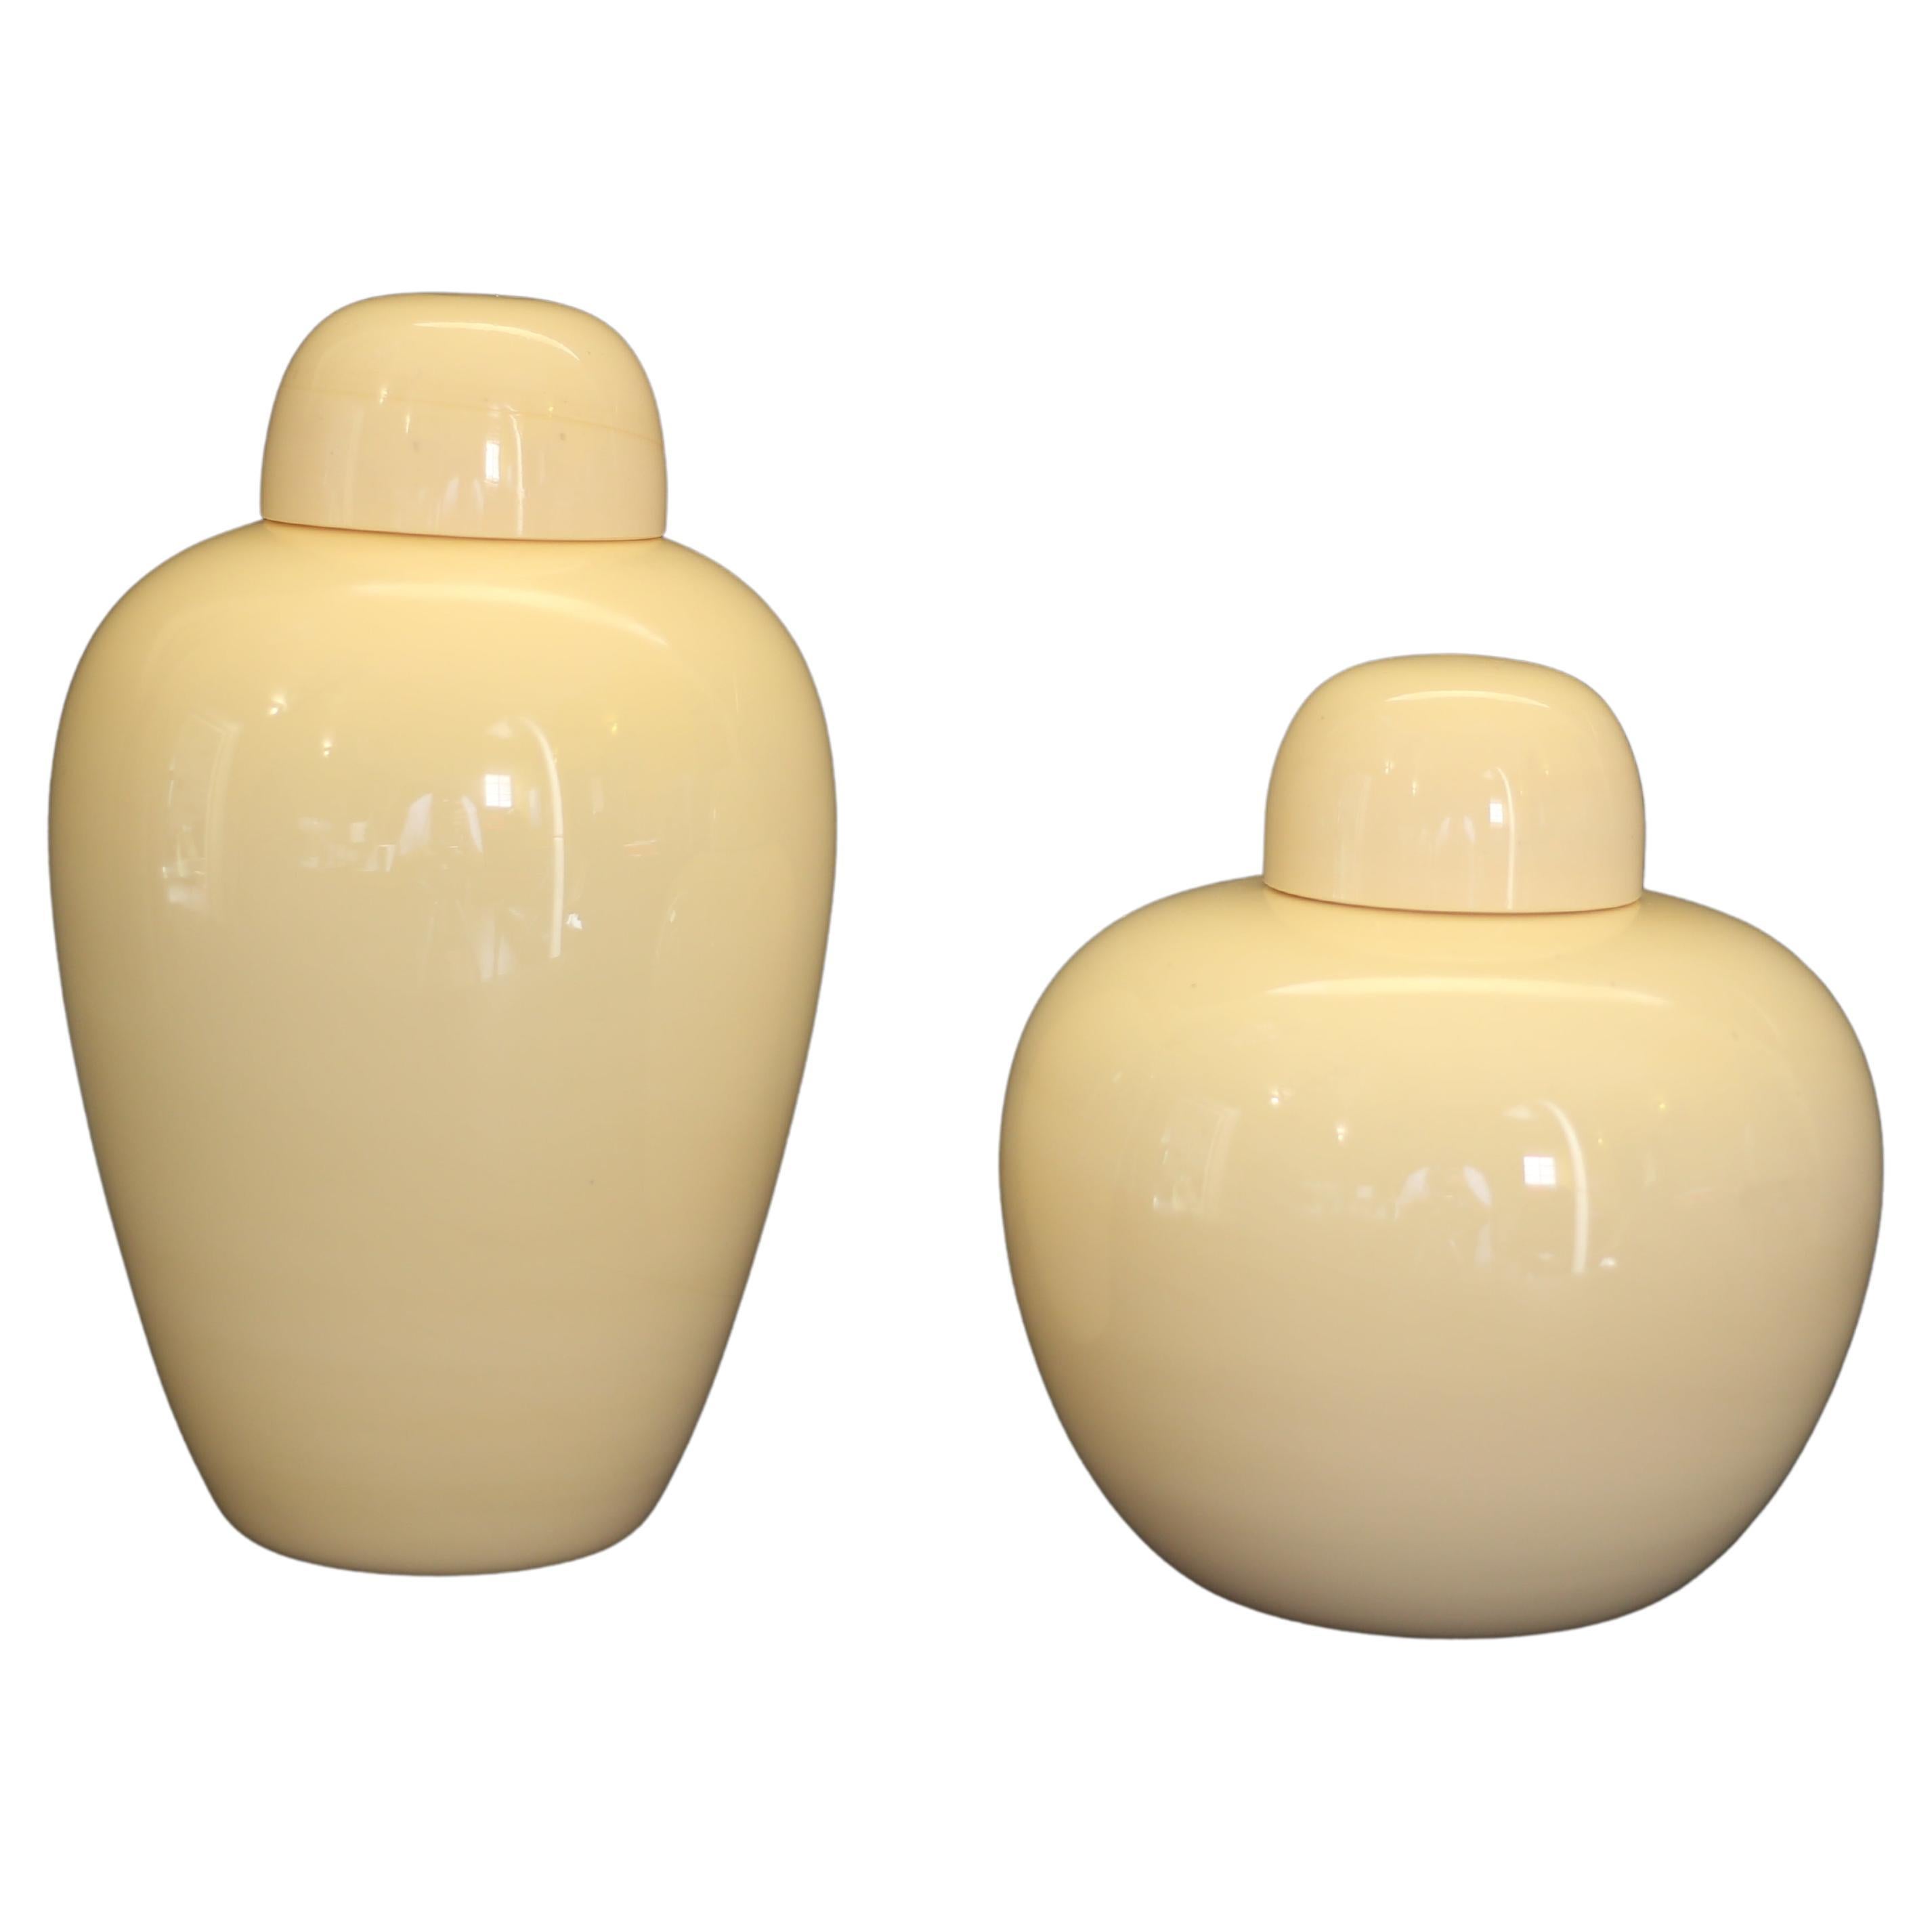 Tobia Scarpa set of cream-colored vases, Venini "Chinese" model, 1960s For Sale